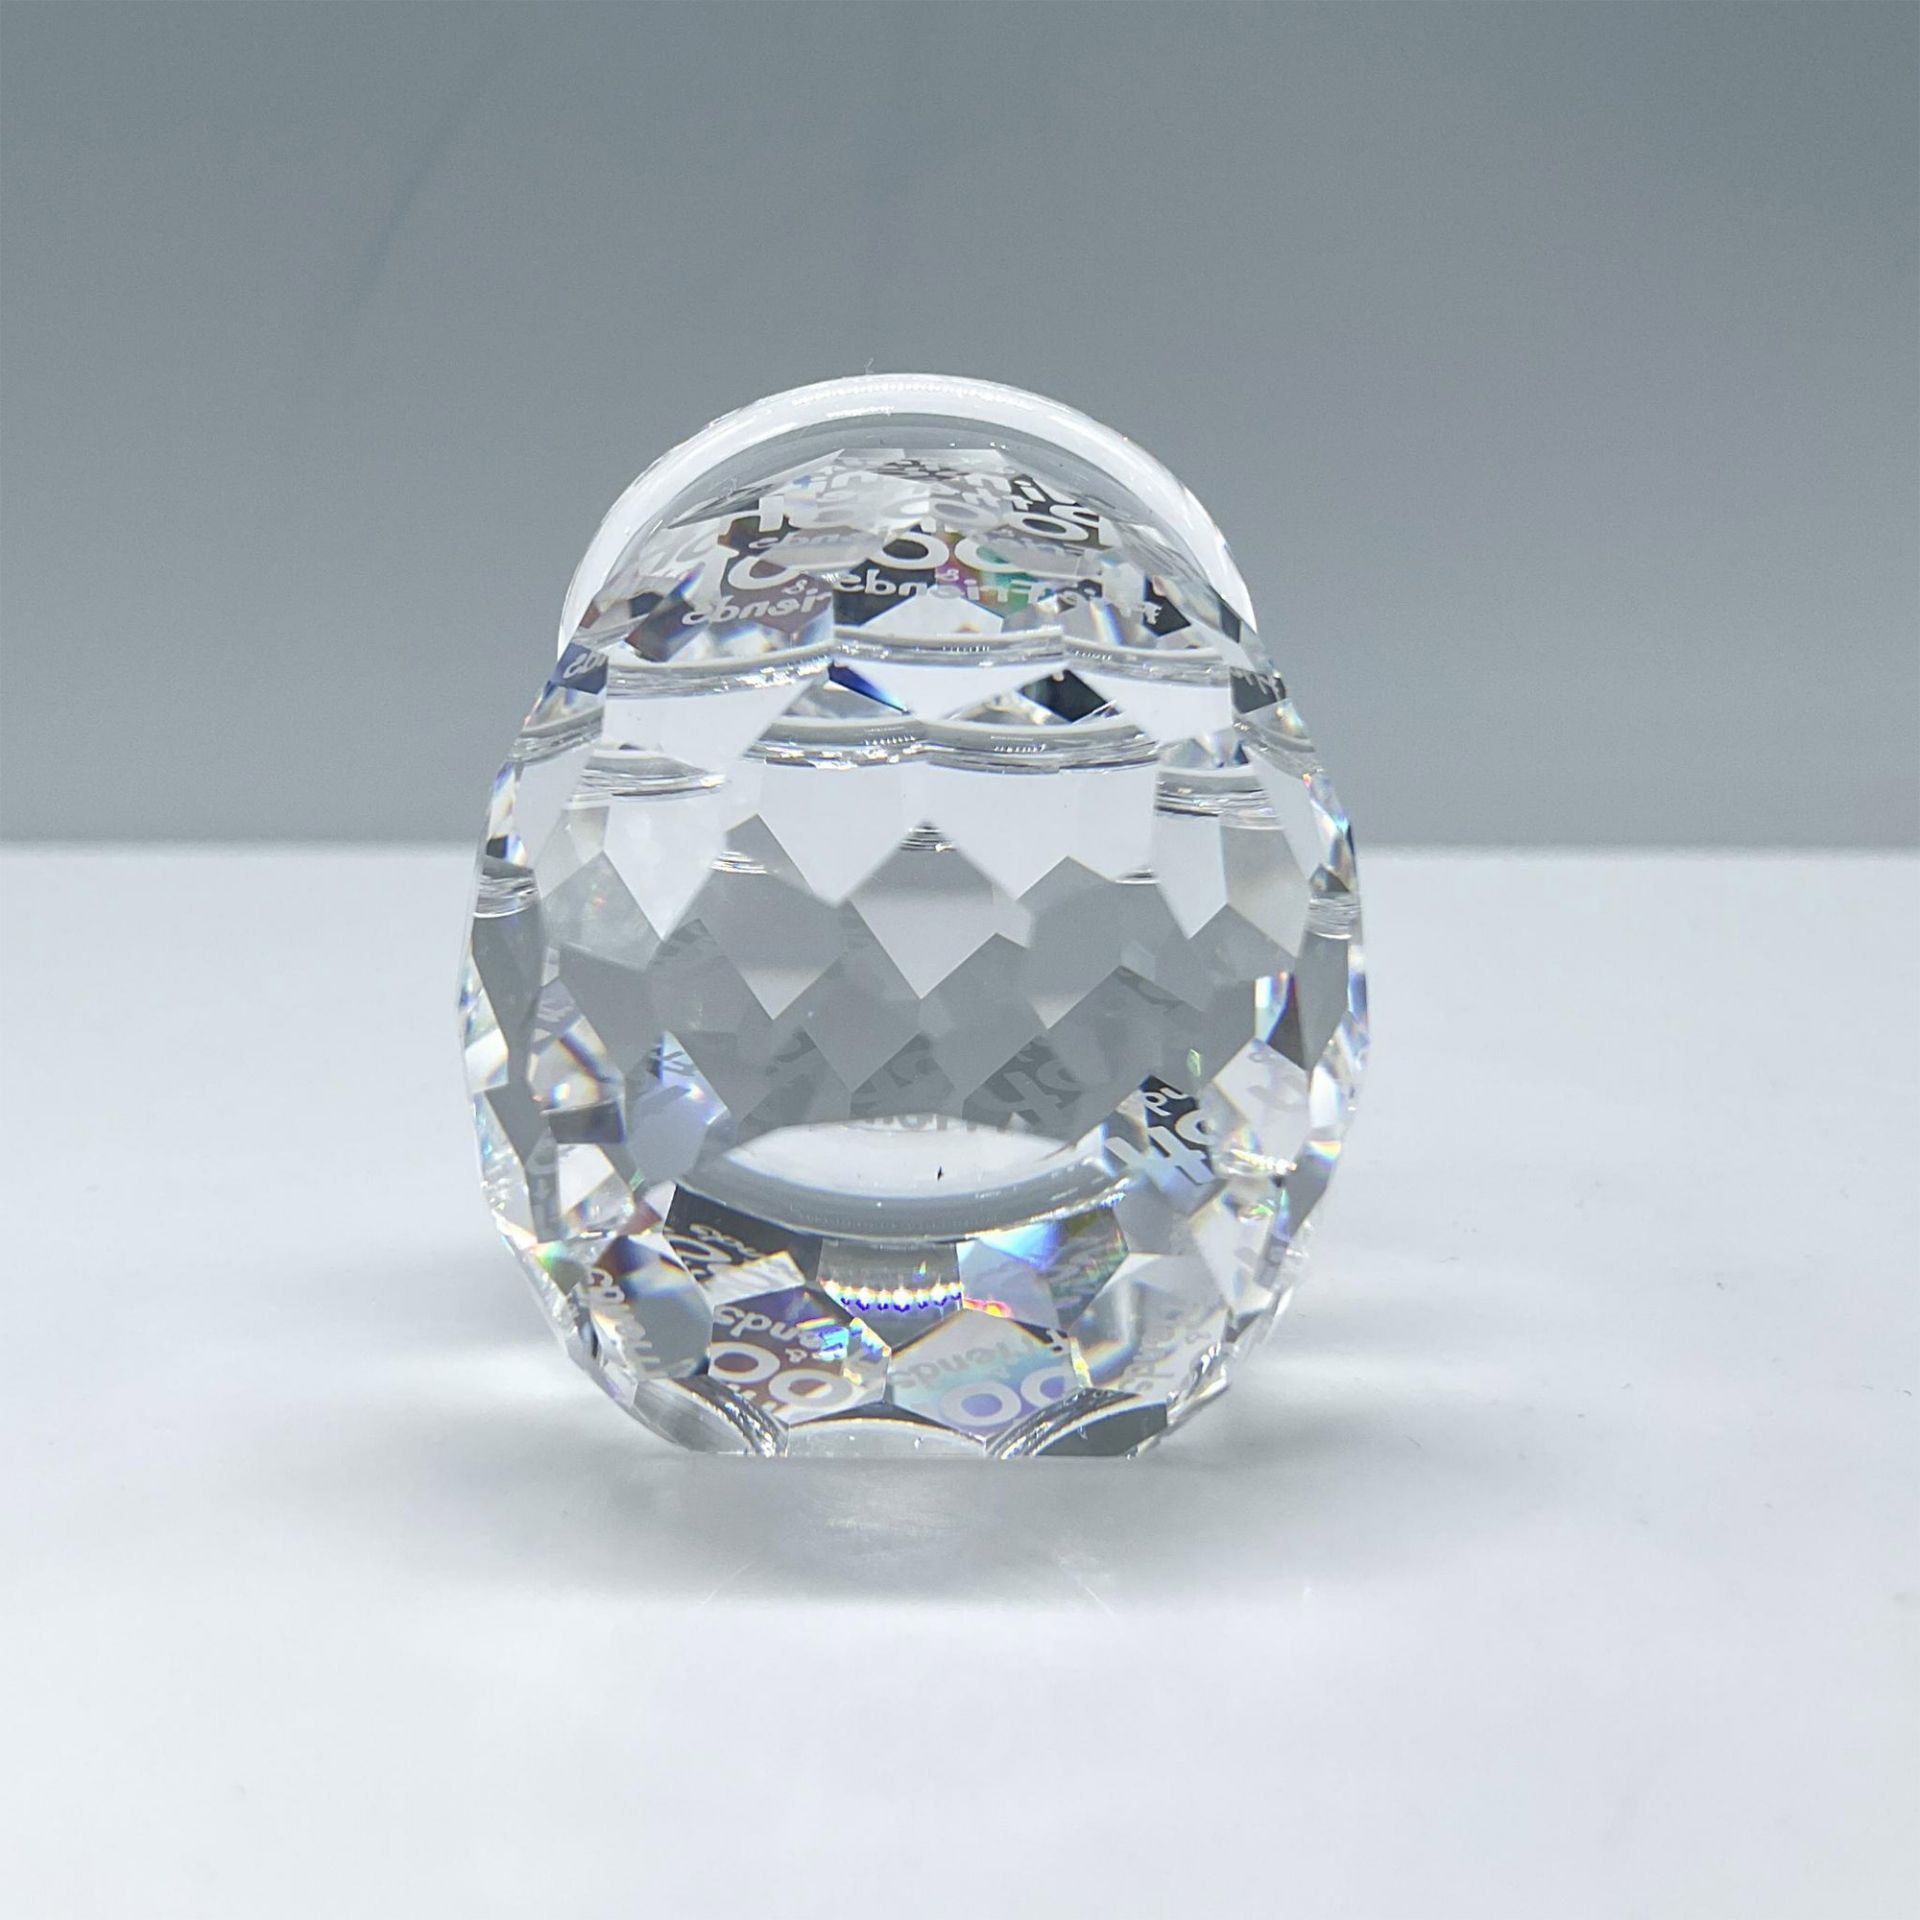 Swarovski Crystal Figurine, Winnie The Pooh Plaque - Image 2 of 4